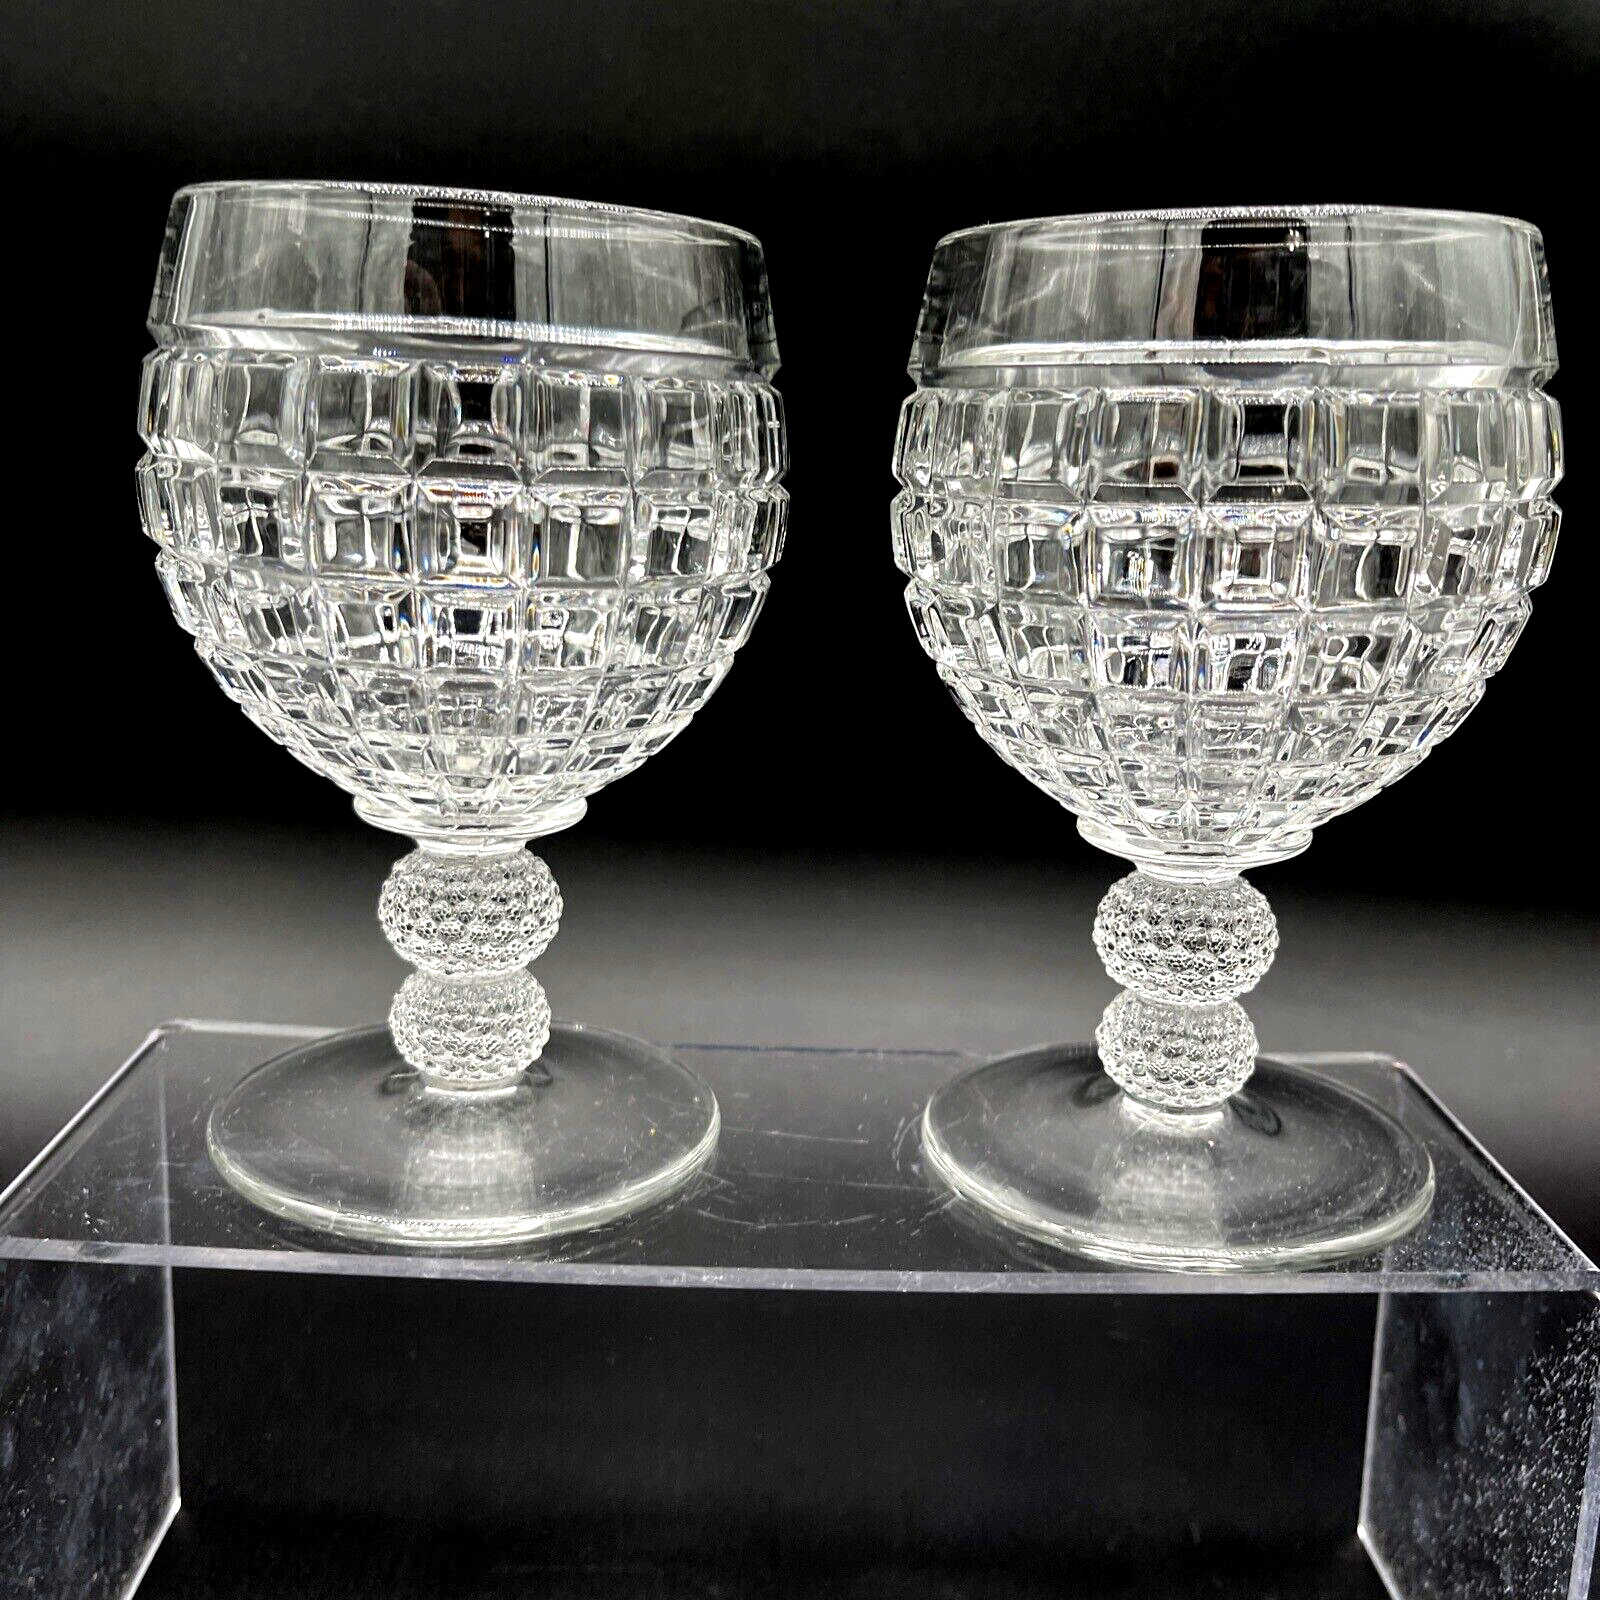 2 Heisey Victorian Crystal Wine Glasses Water Goblet 2 Balls Stem 5.5